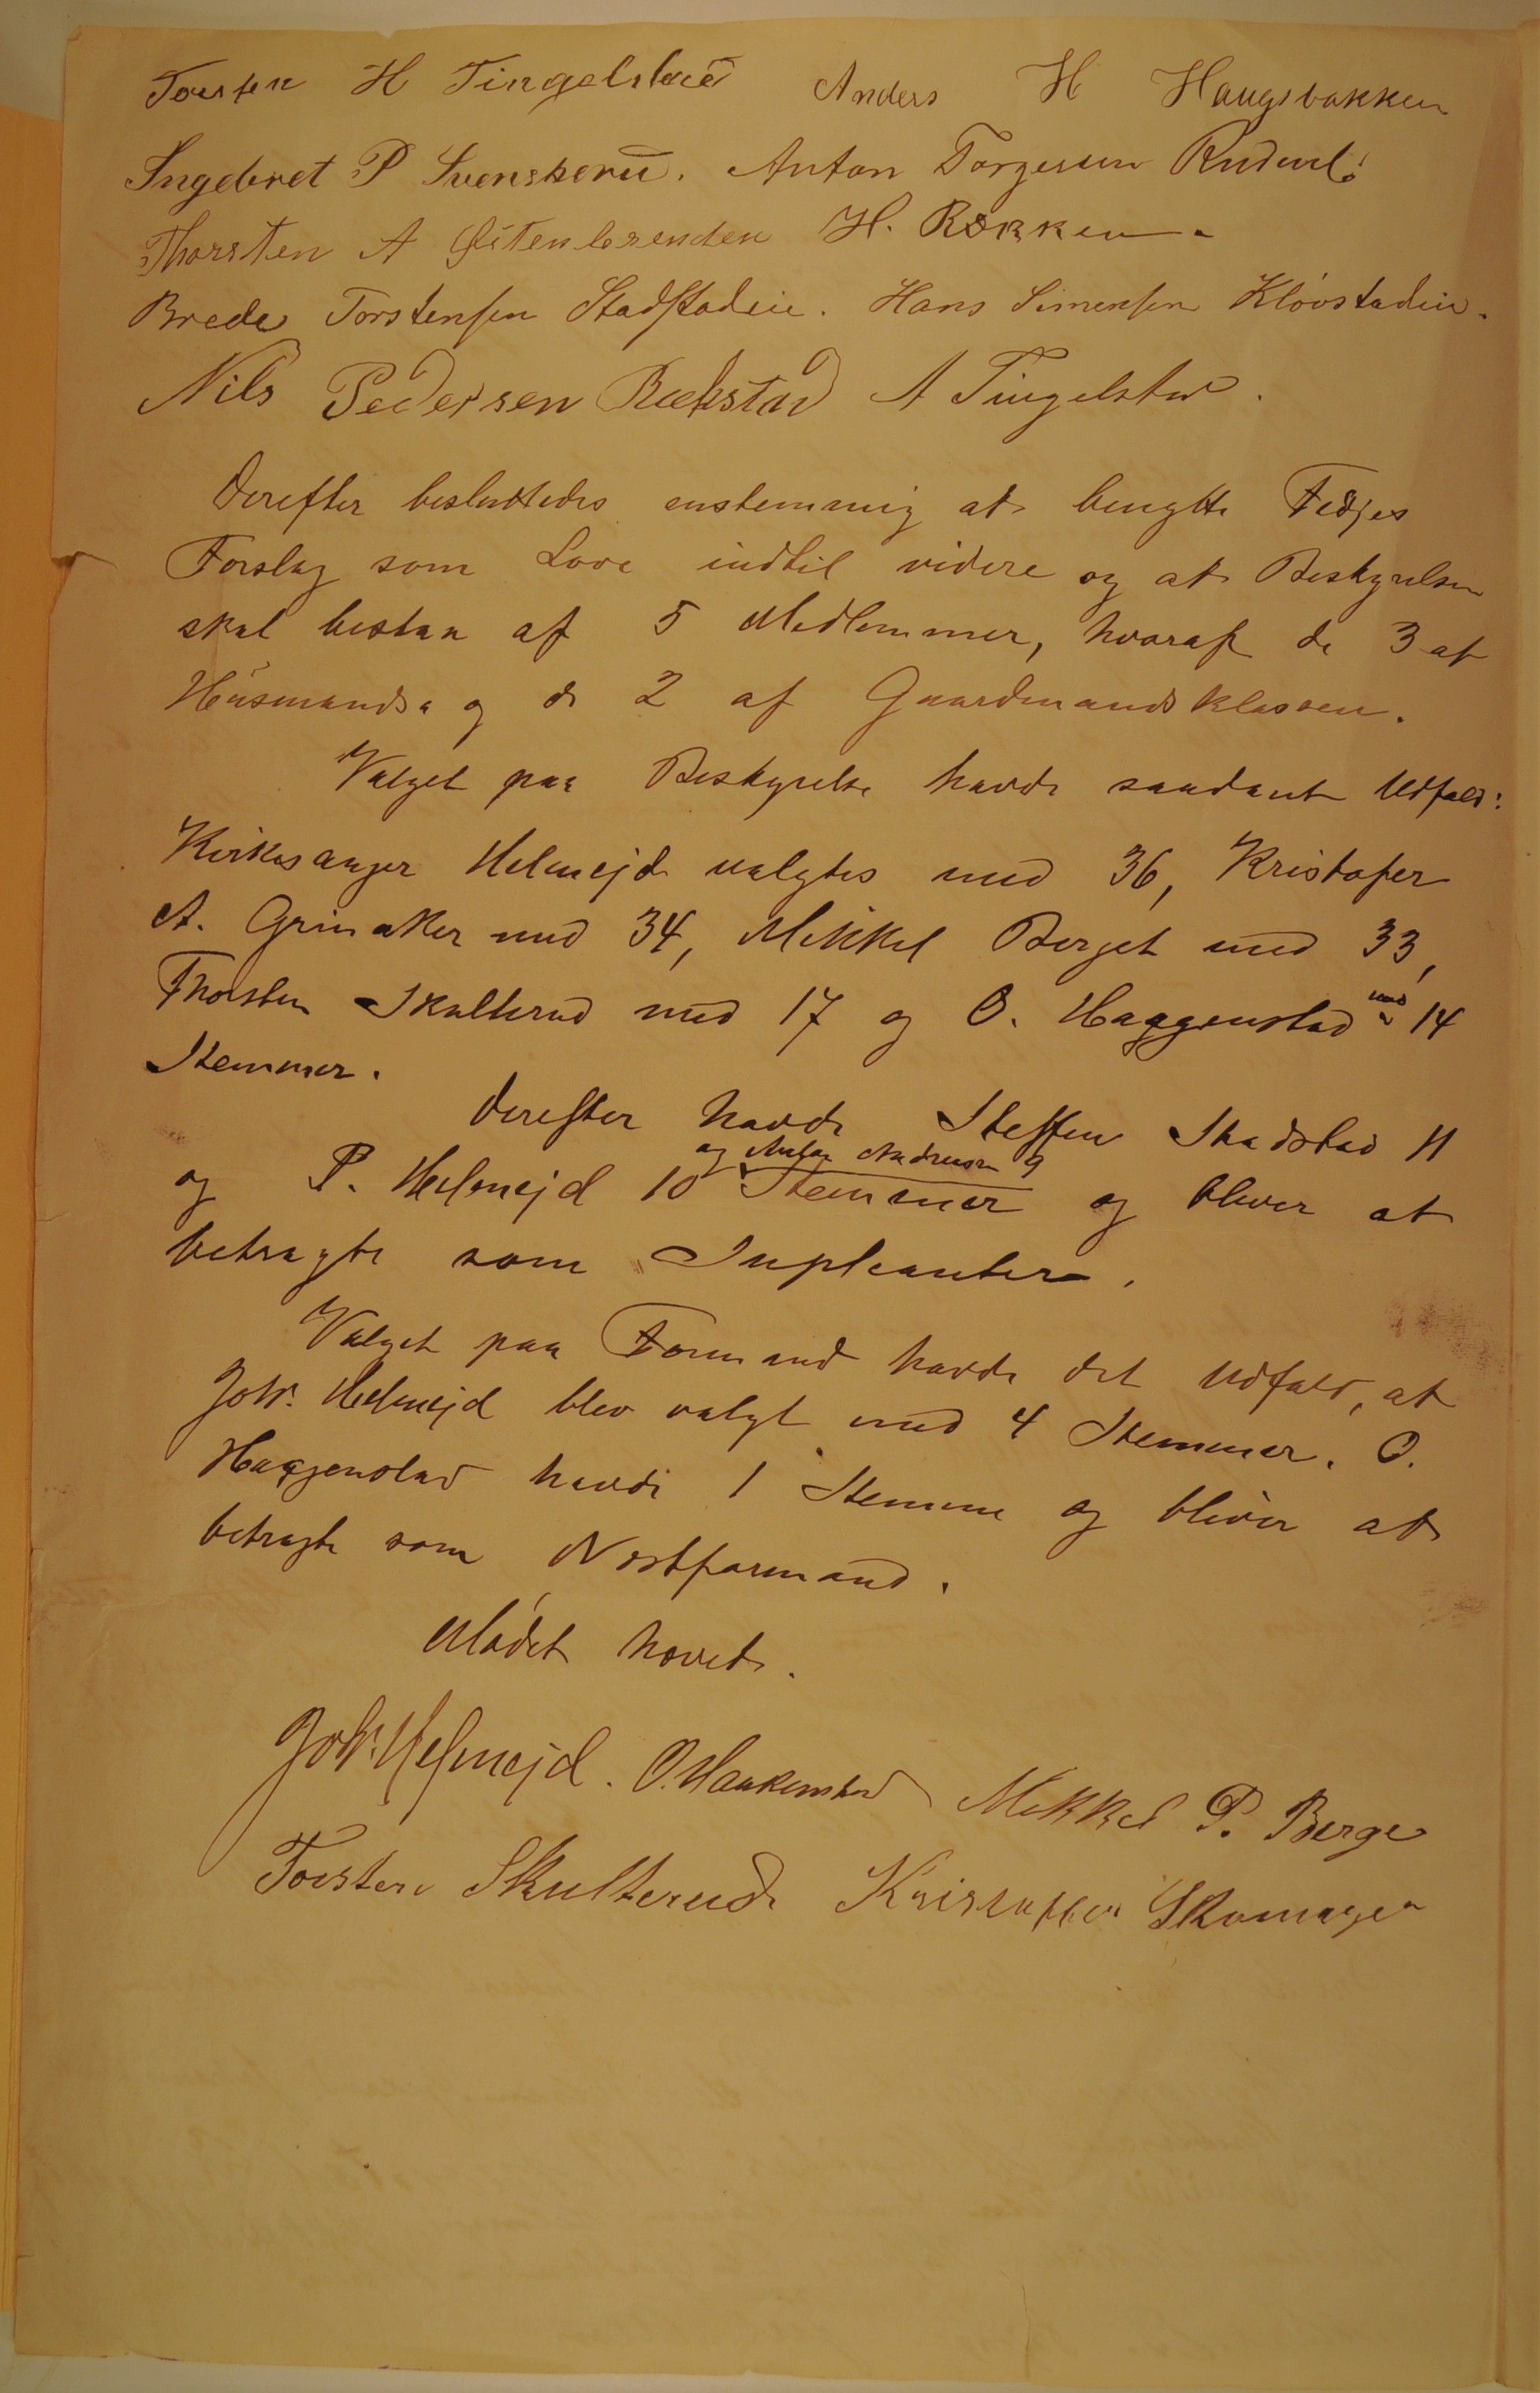 , Founding document 1885, 1885